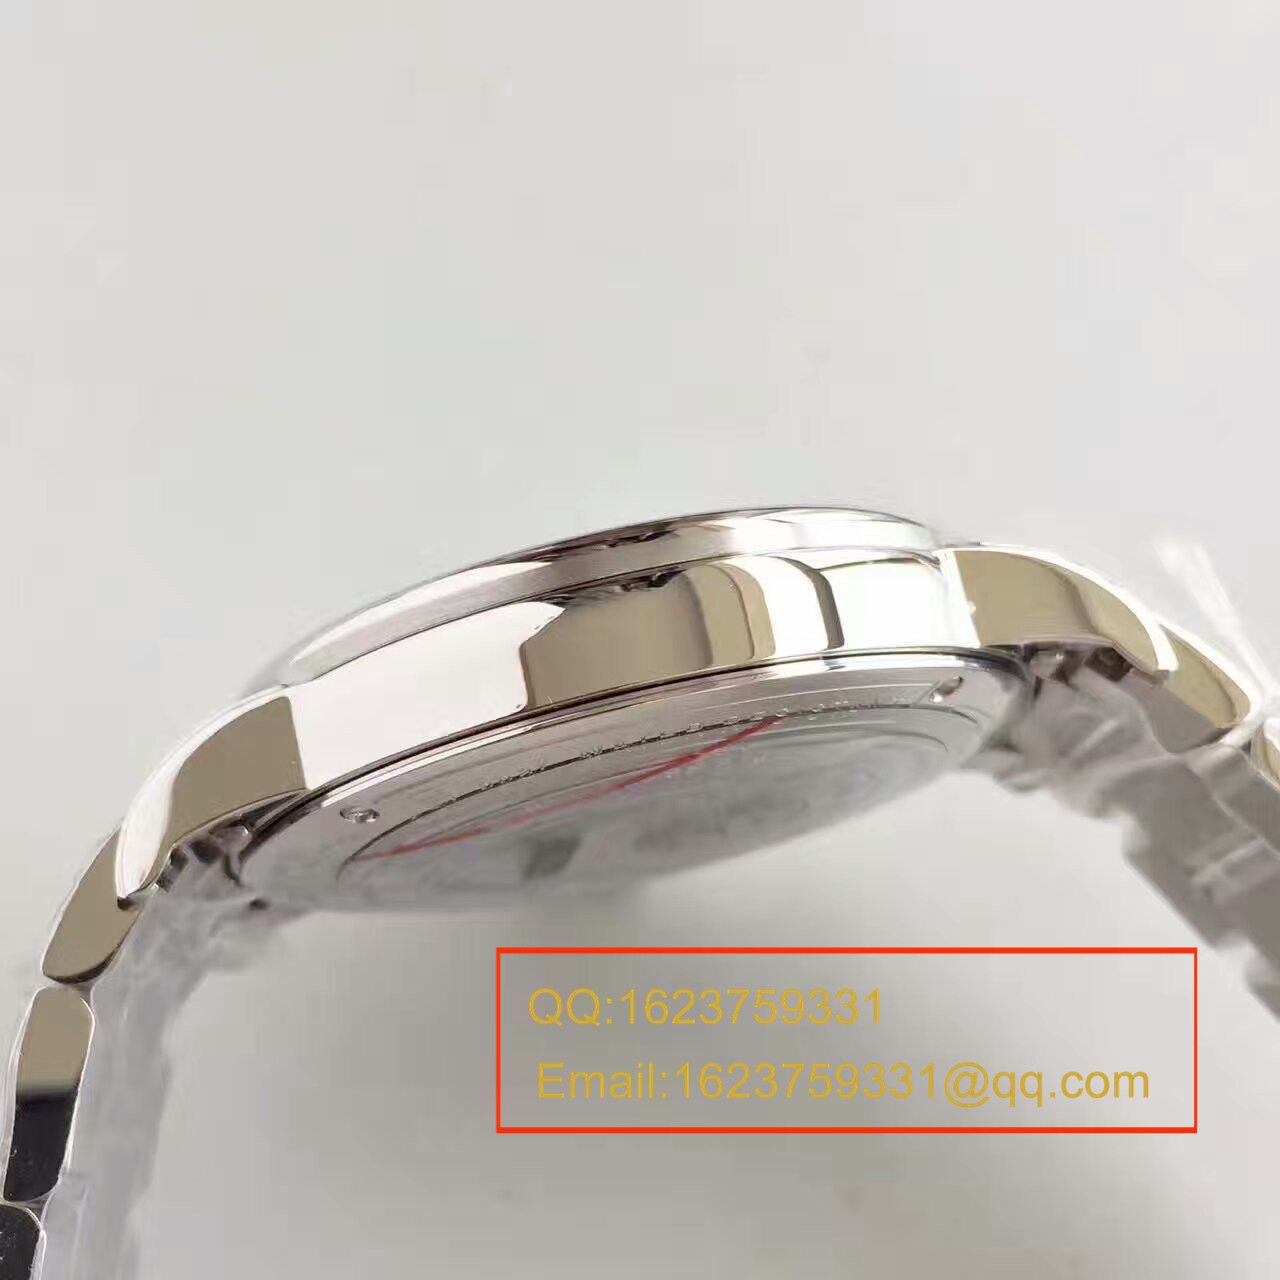 【VF厂1:1高仿复刻手表】万宝龙明星4810系列U0114854腕表 / MB007